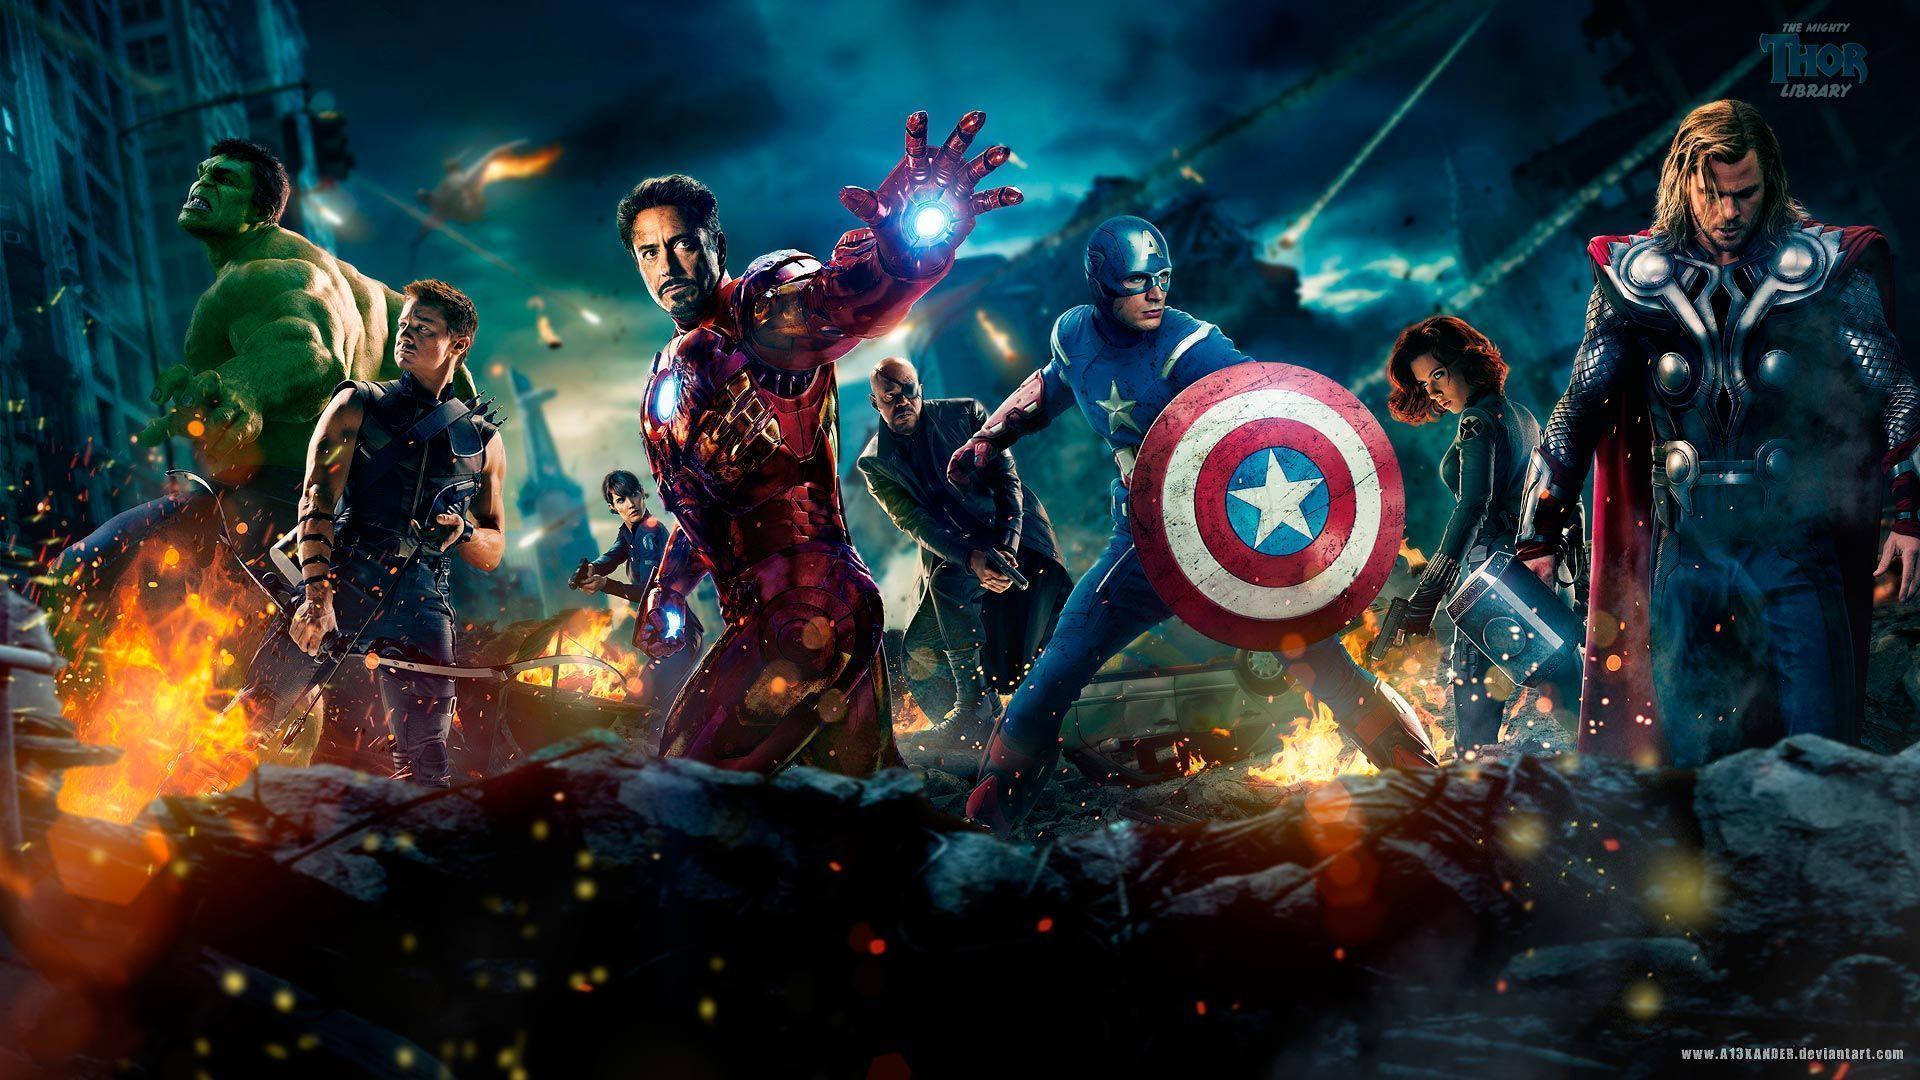 Captain America Wallpaper (Image Gallery) wallpaper 1080p